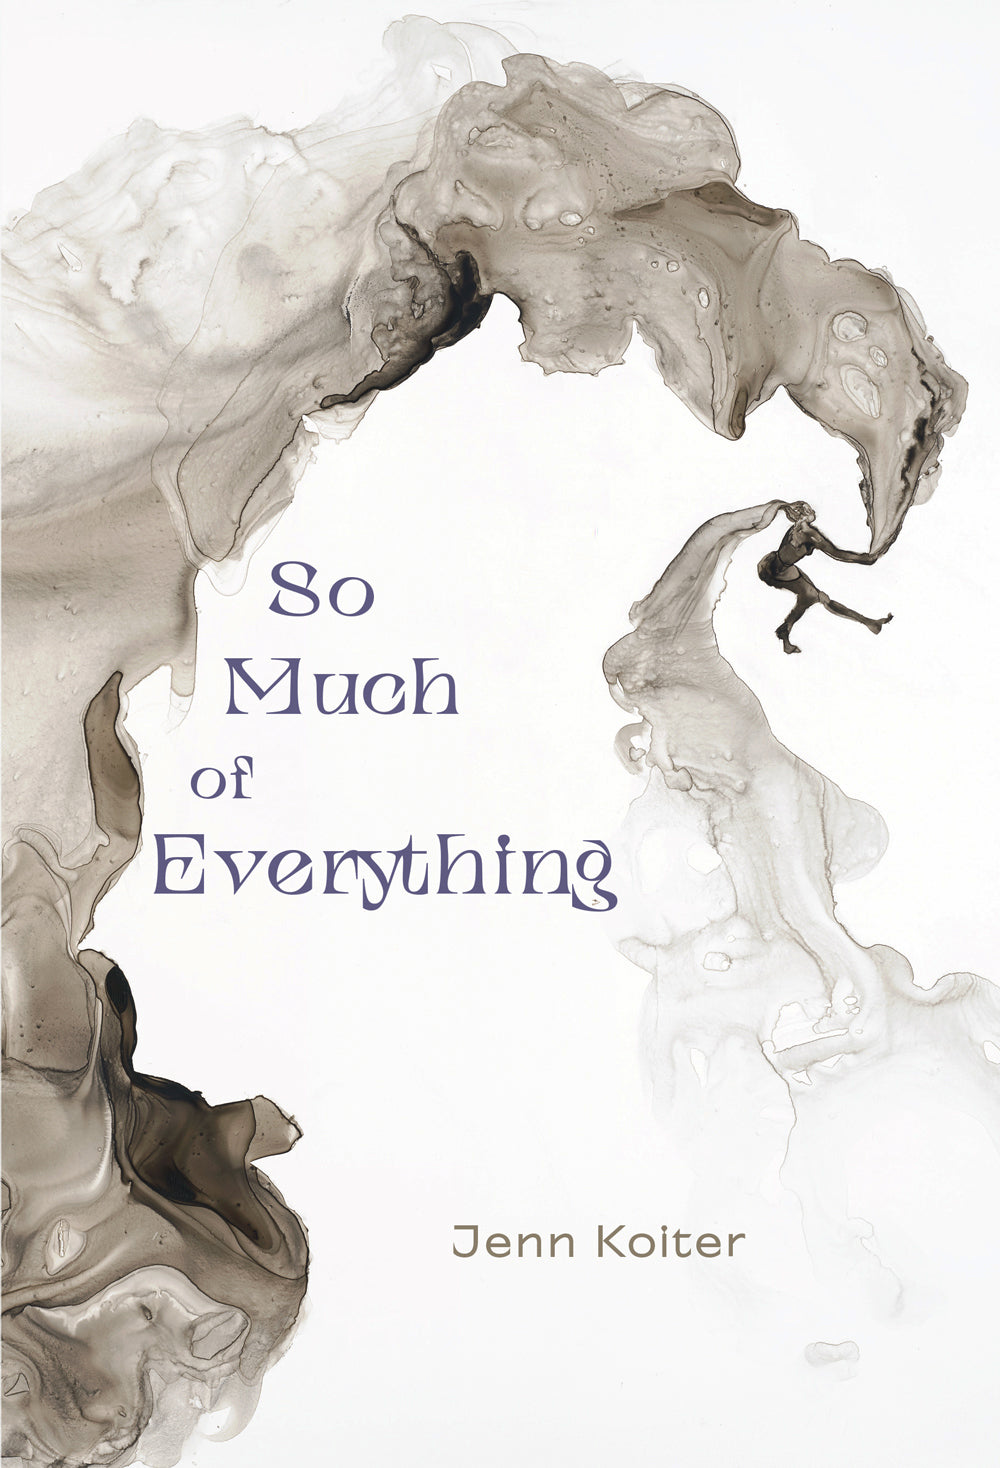 So Much of Everything by Jenn Koiter